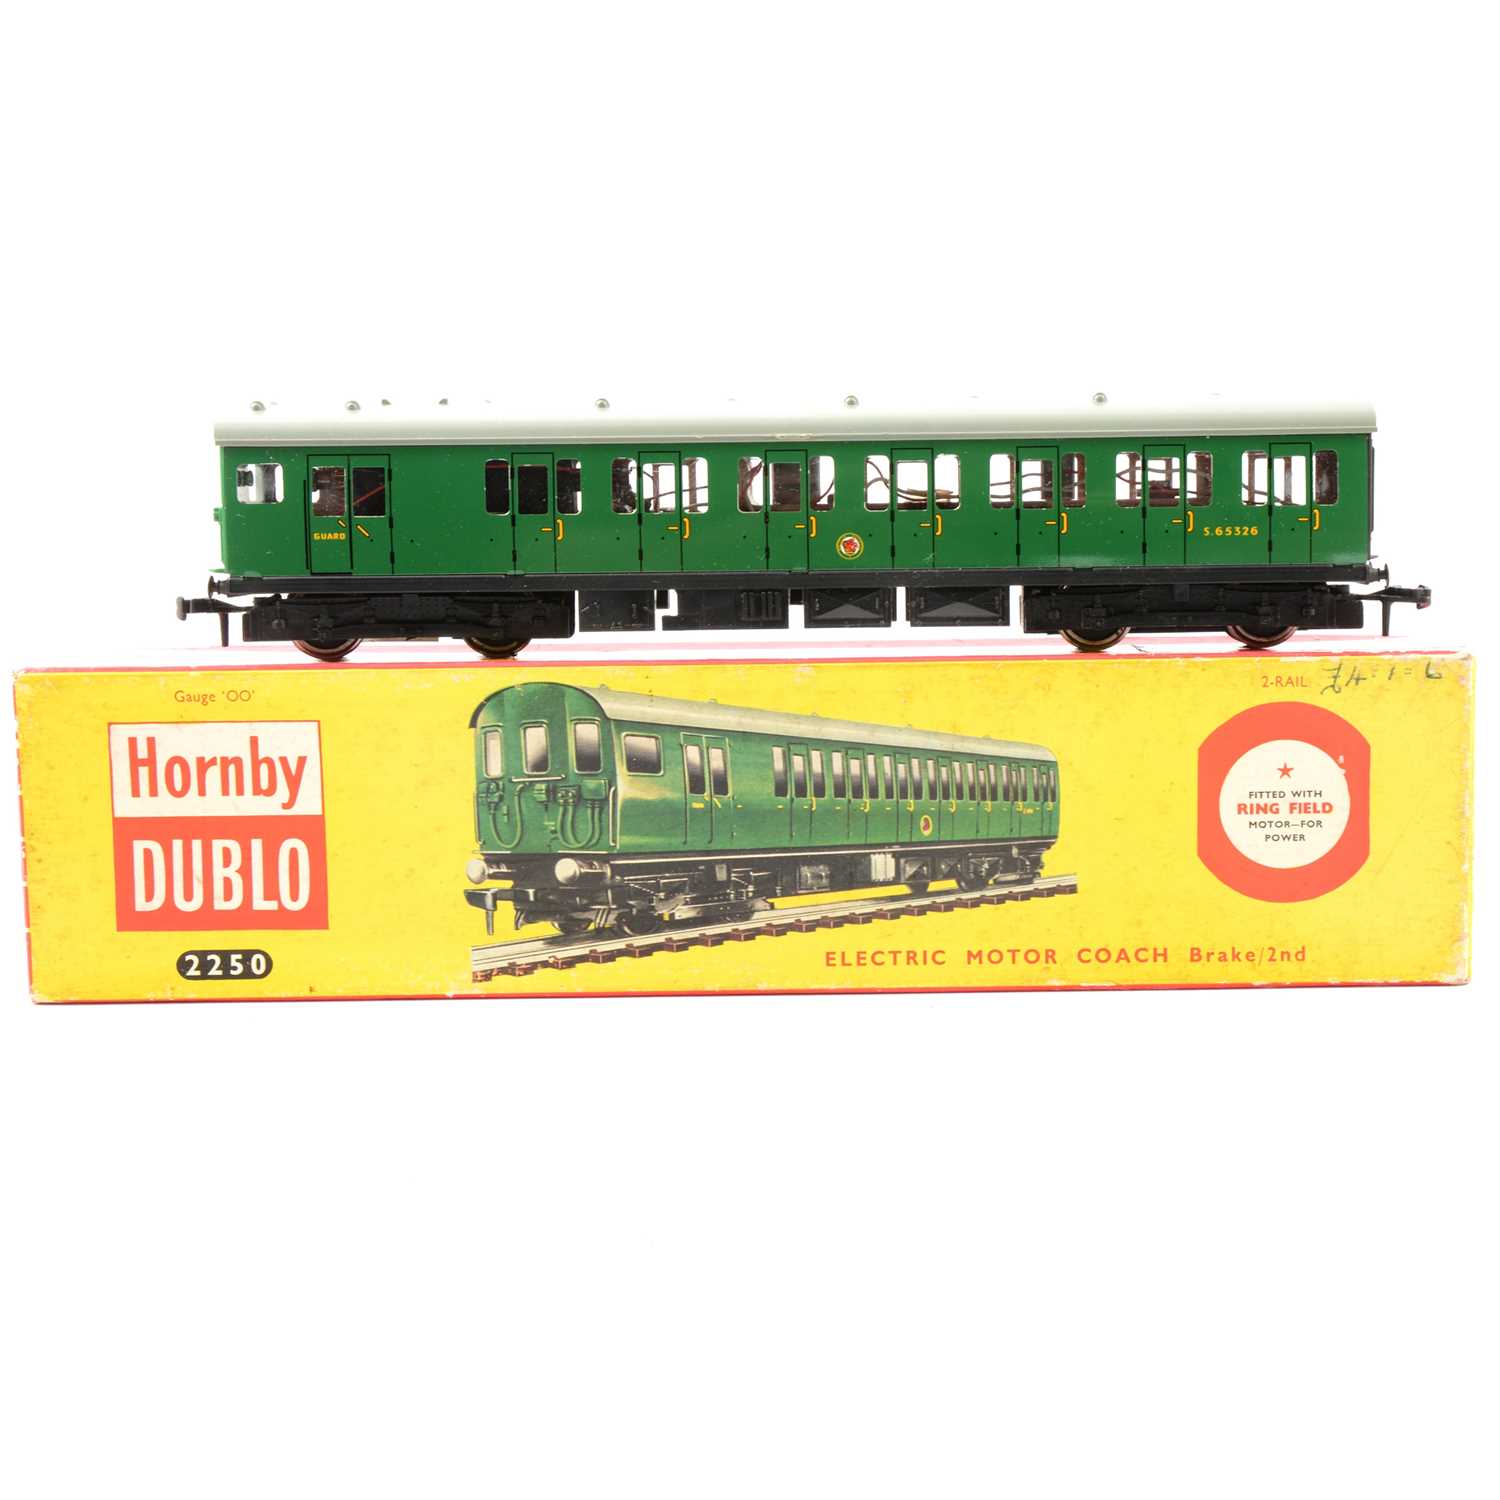 Lot 87 - Hornby Dublo OO gauge model railway electric motor coach ref 2250 brake/2nd